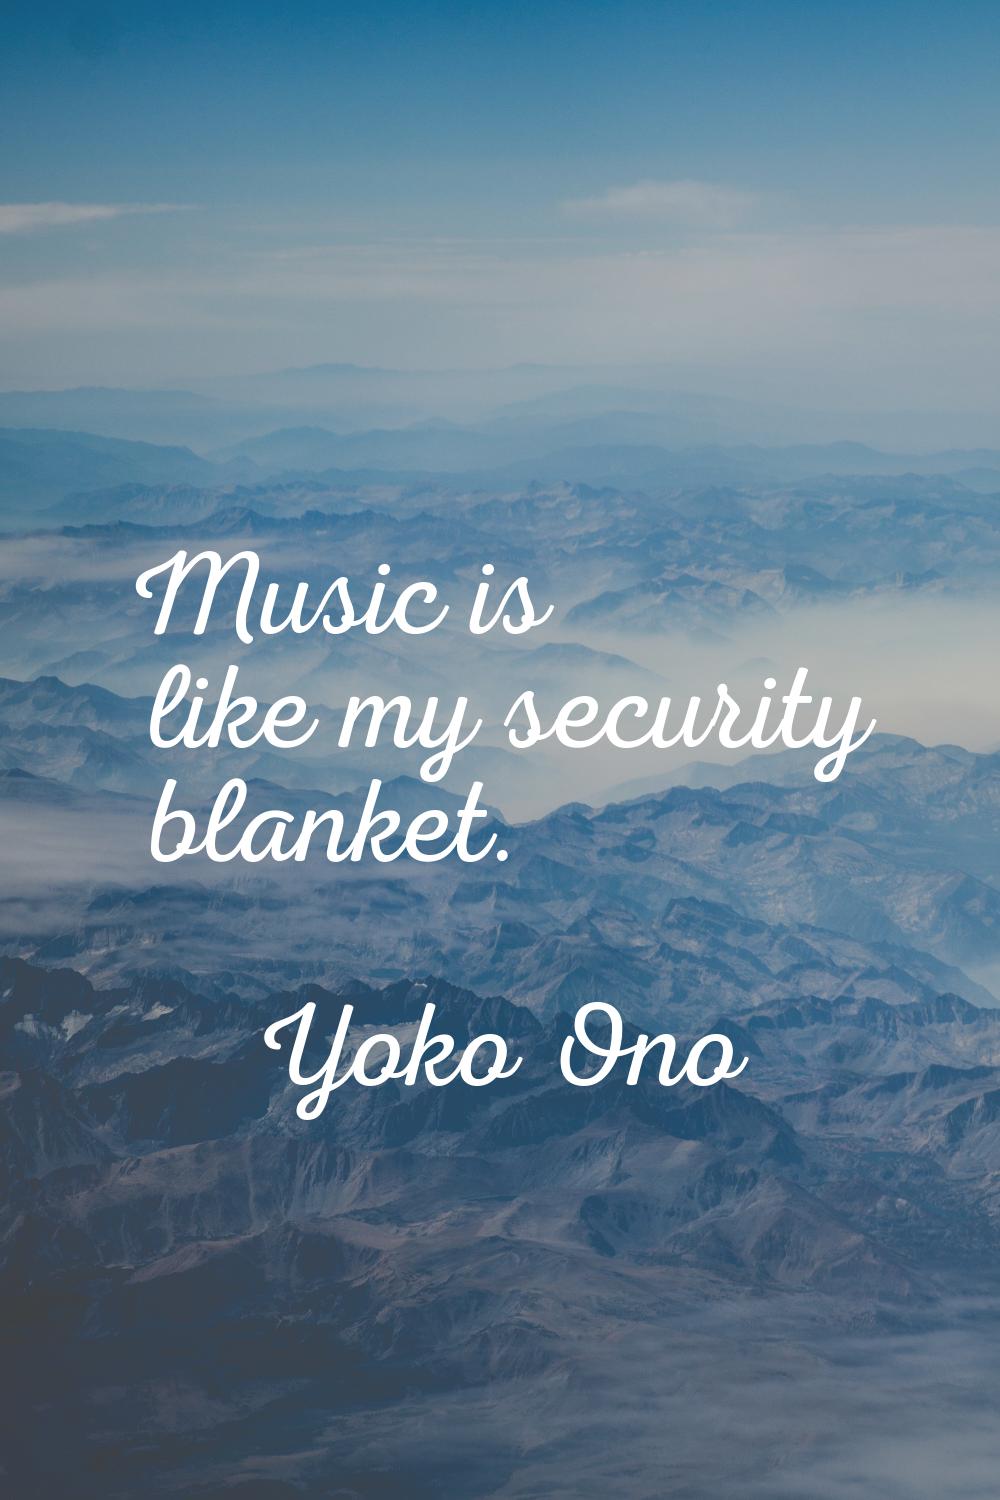 Music is like my security blanket.